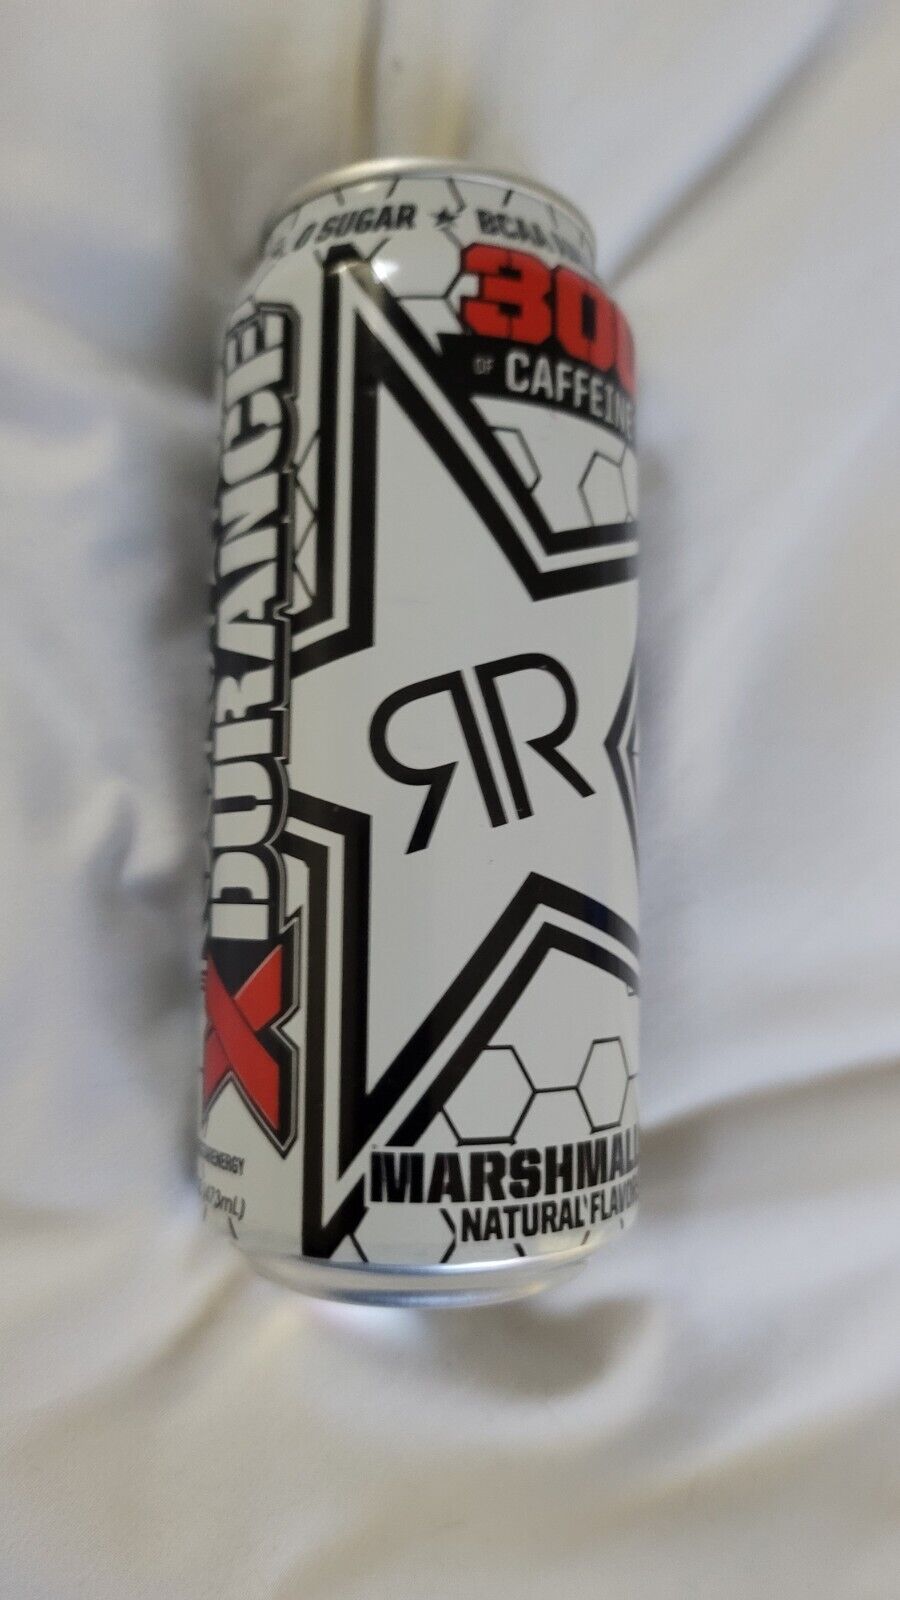 Rockstar Xdurance Marshmallow Energy Drink, 16oz Can, Discontinued & Super RARE 